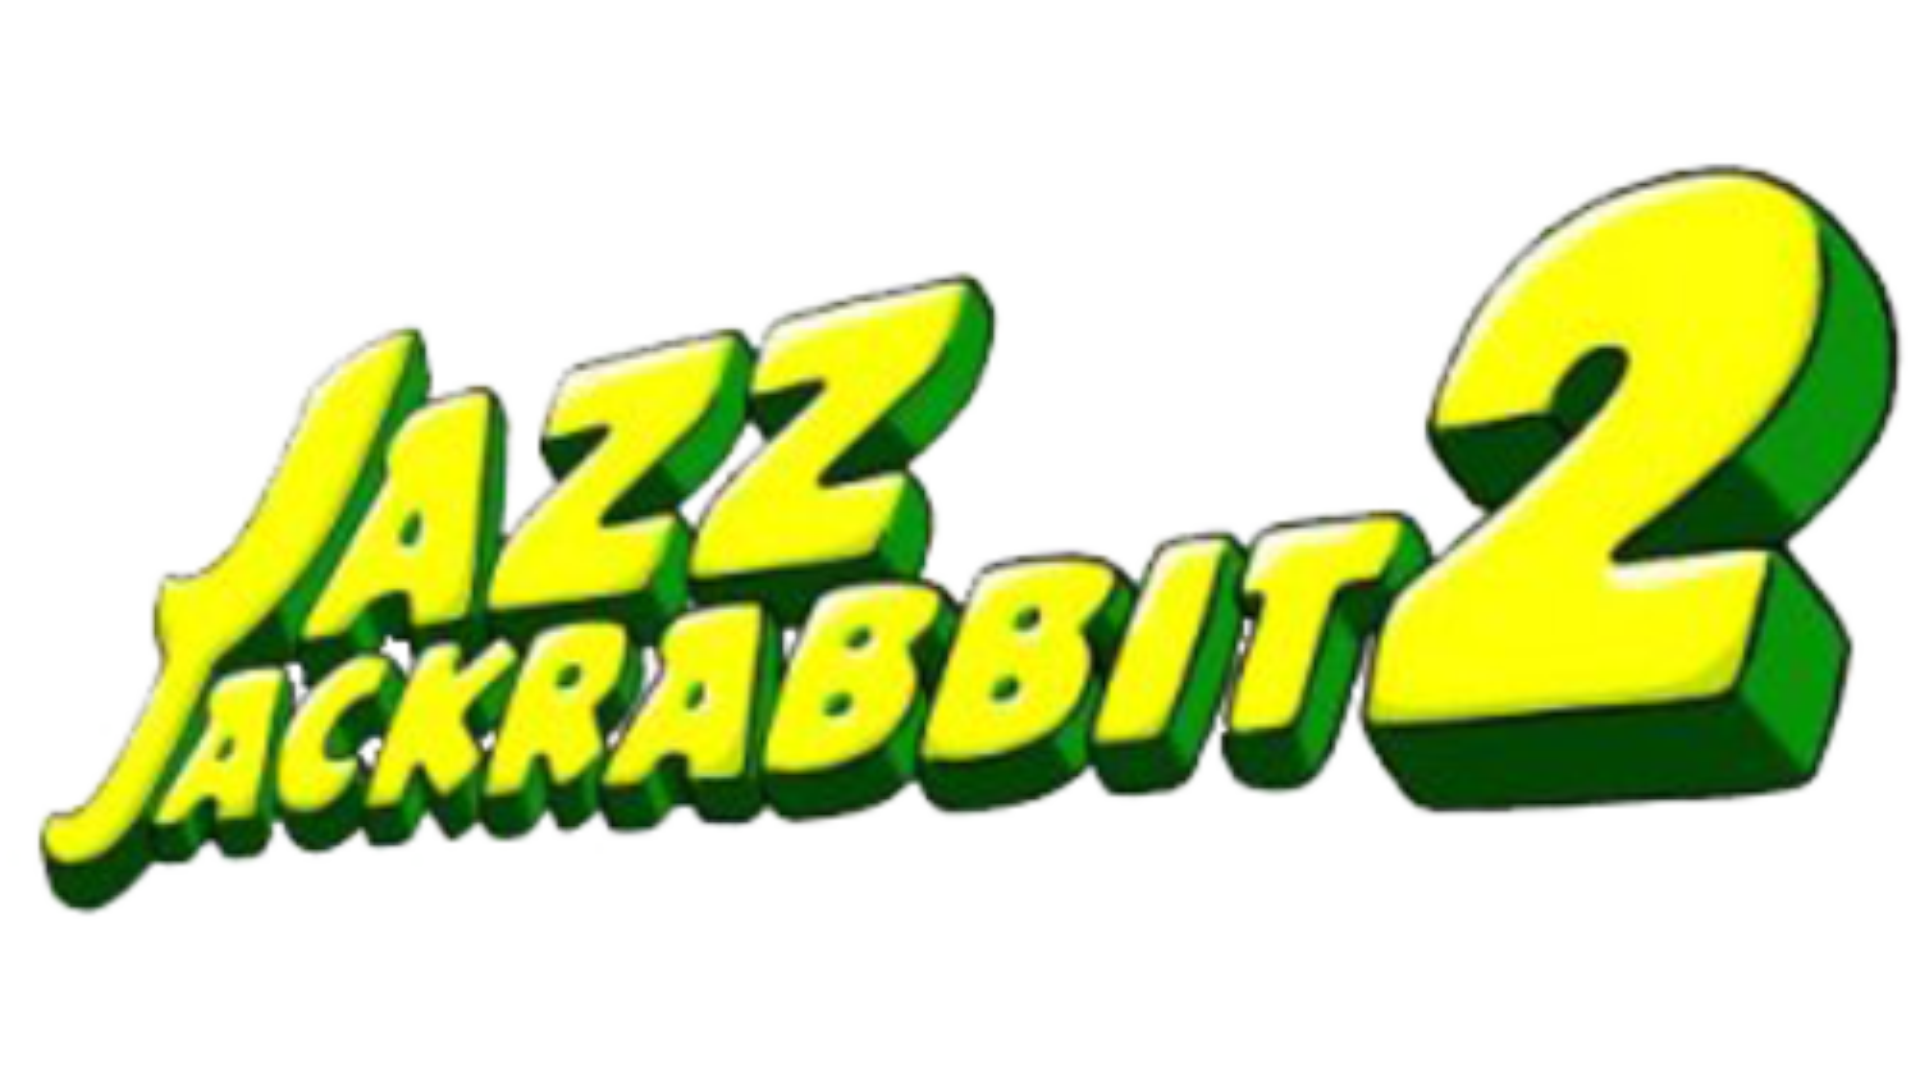 Jazz Jackrabbit 2 Logo